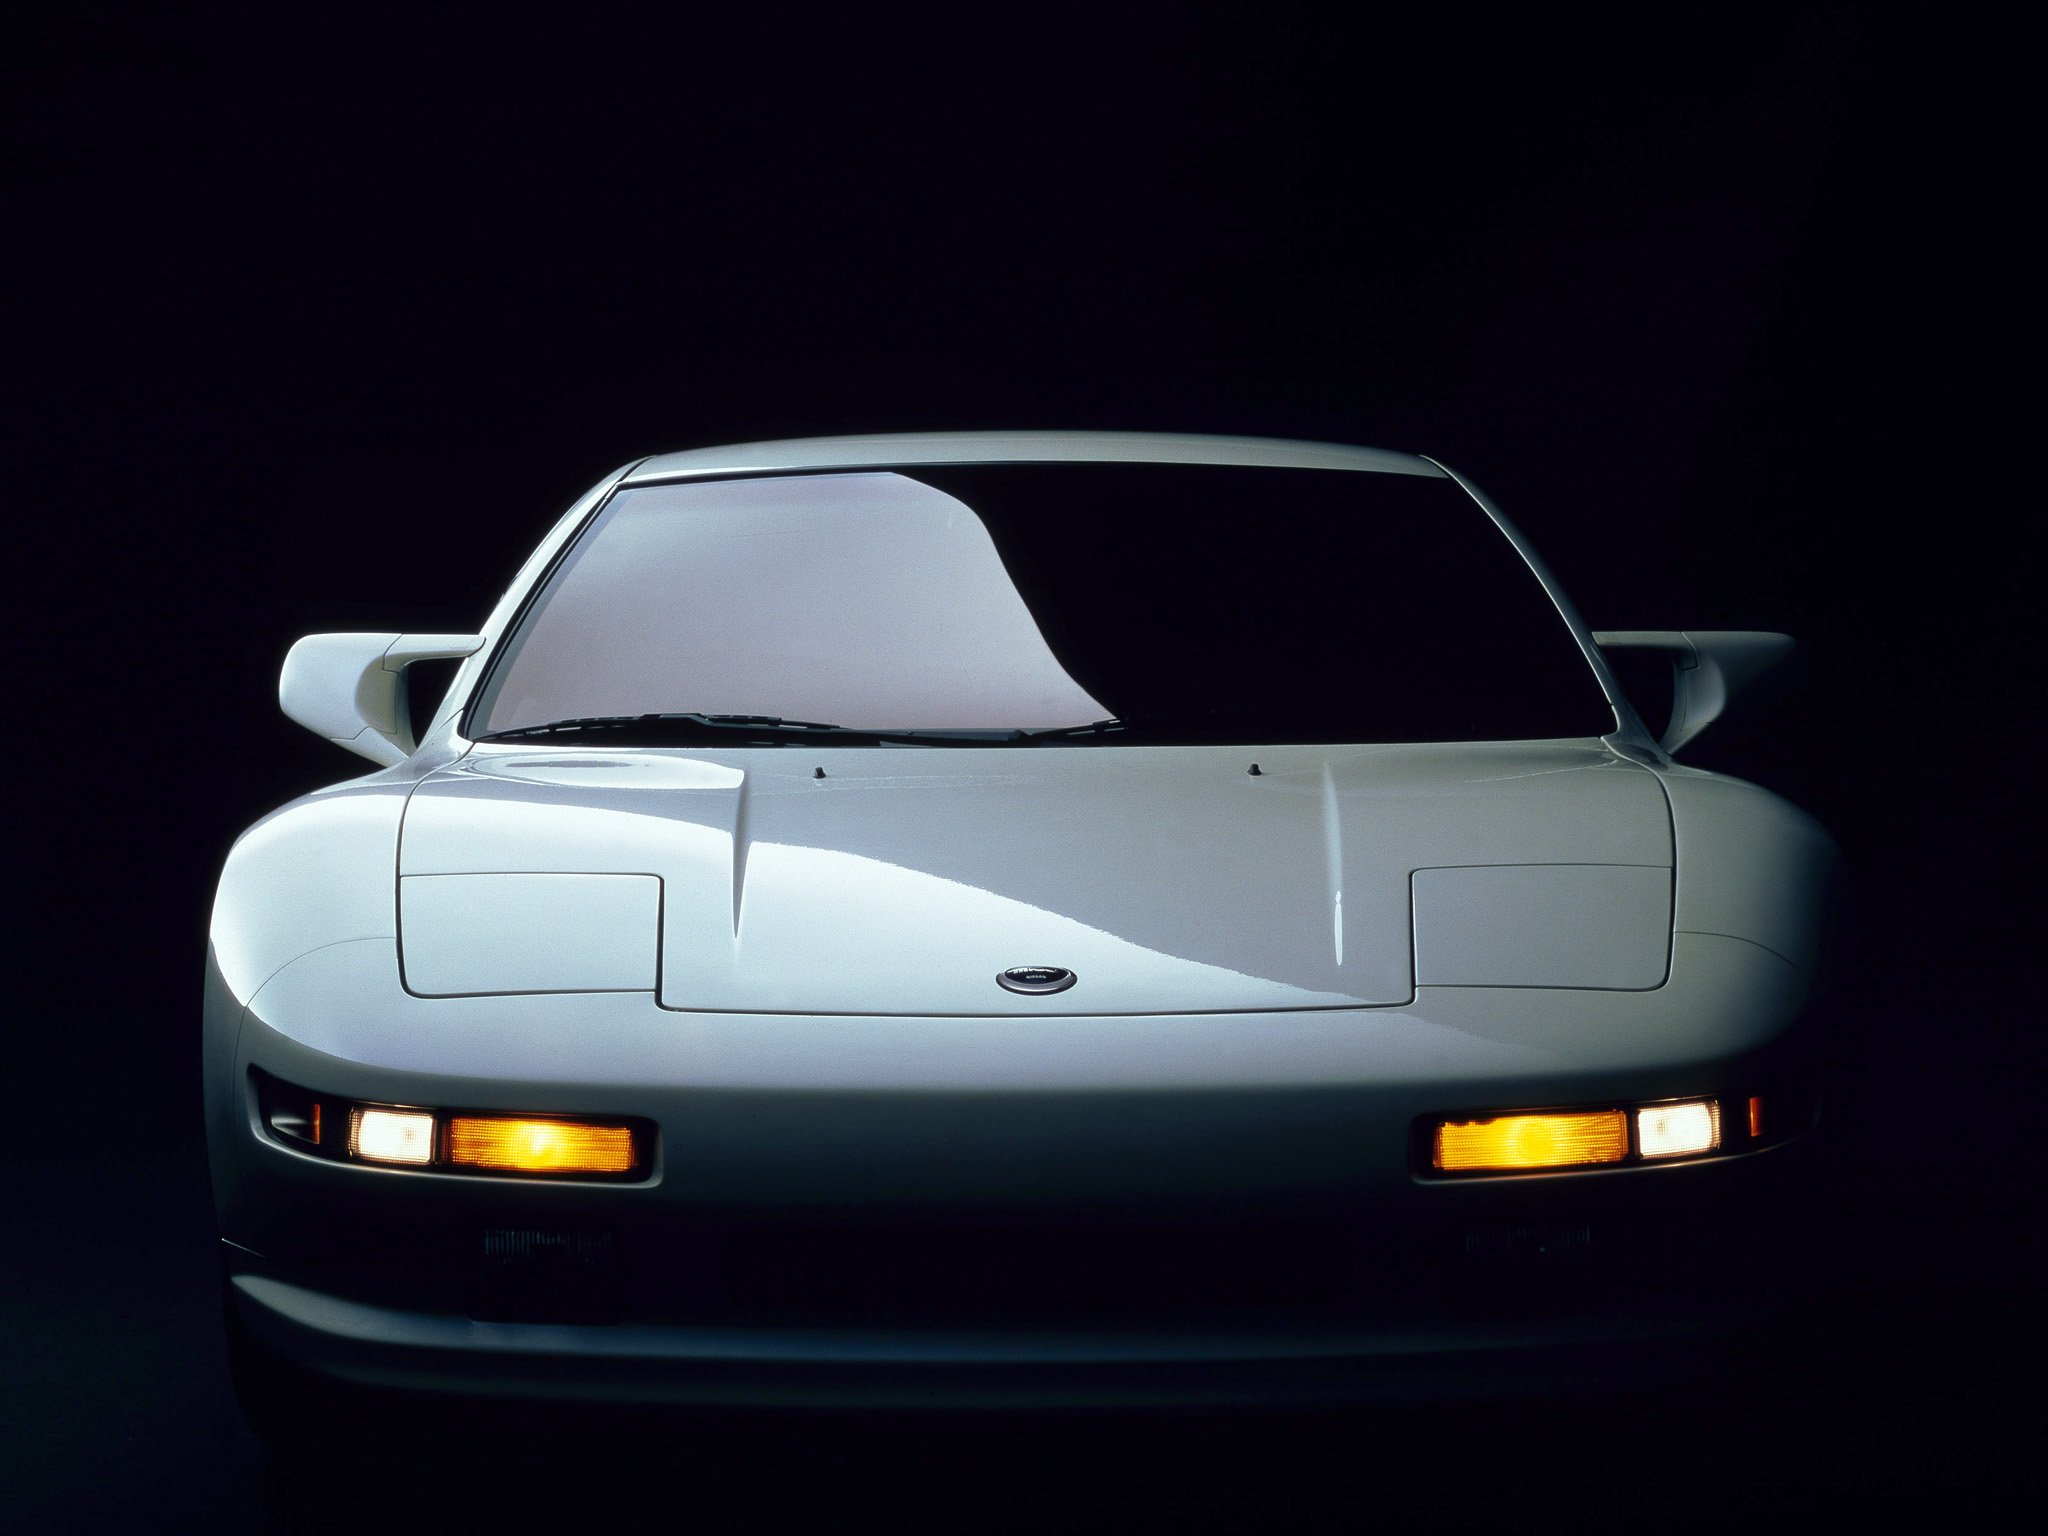 1987, Nissan, Mid4, Type ii, Concept, Supercar Wallpaper